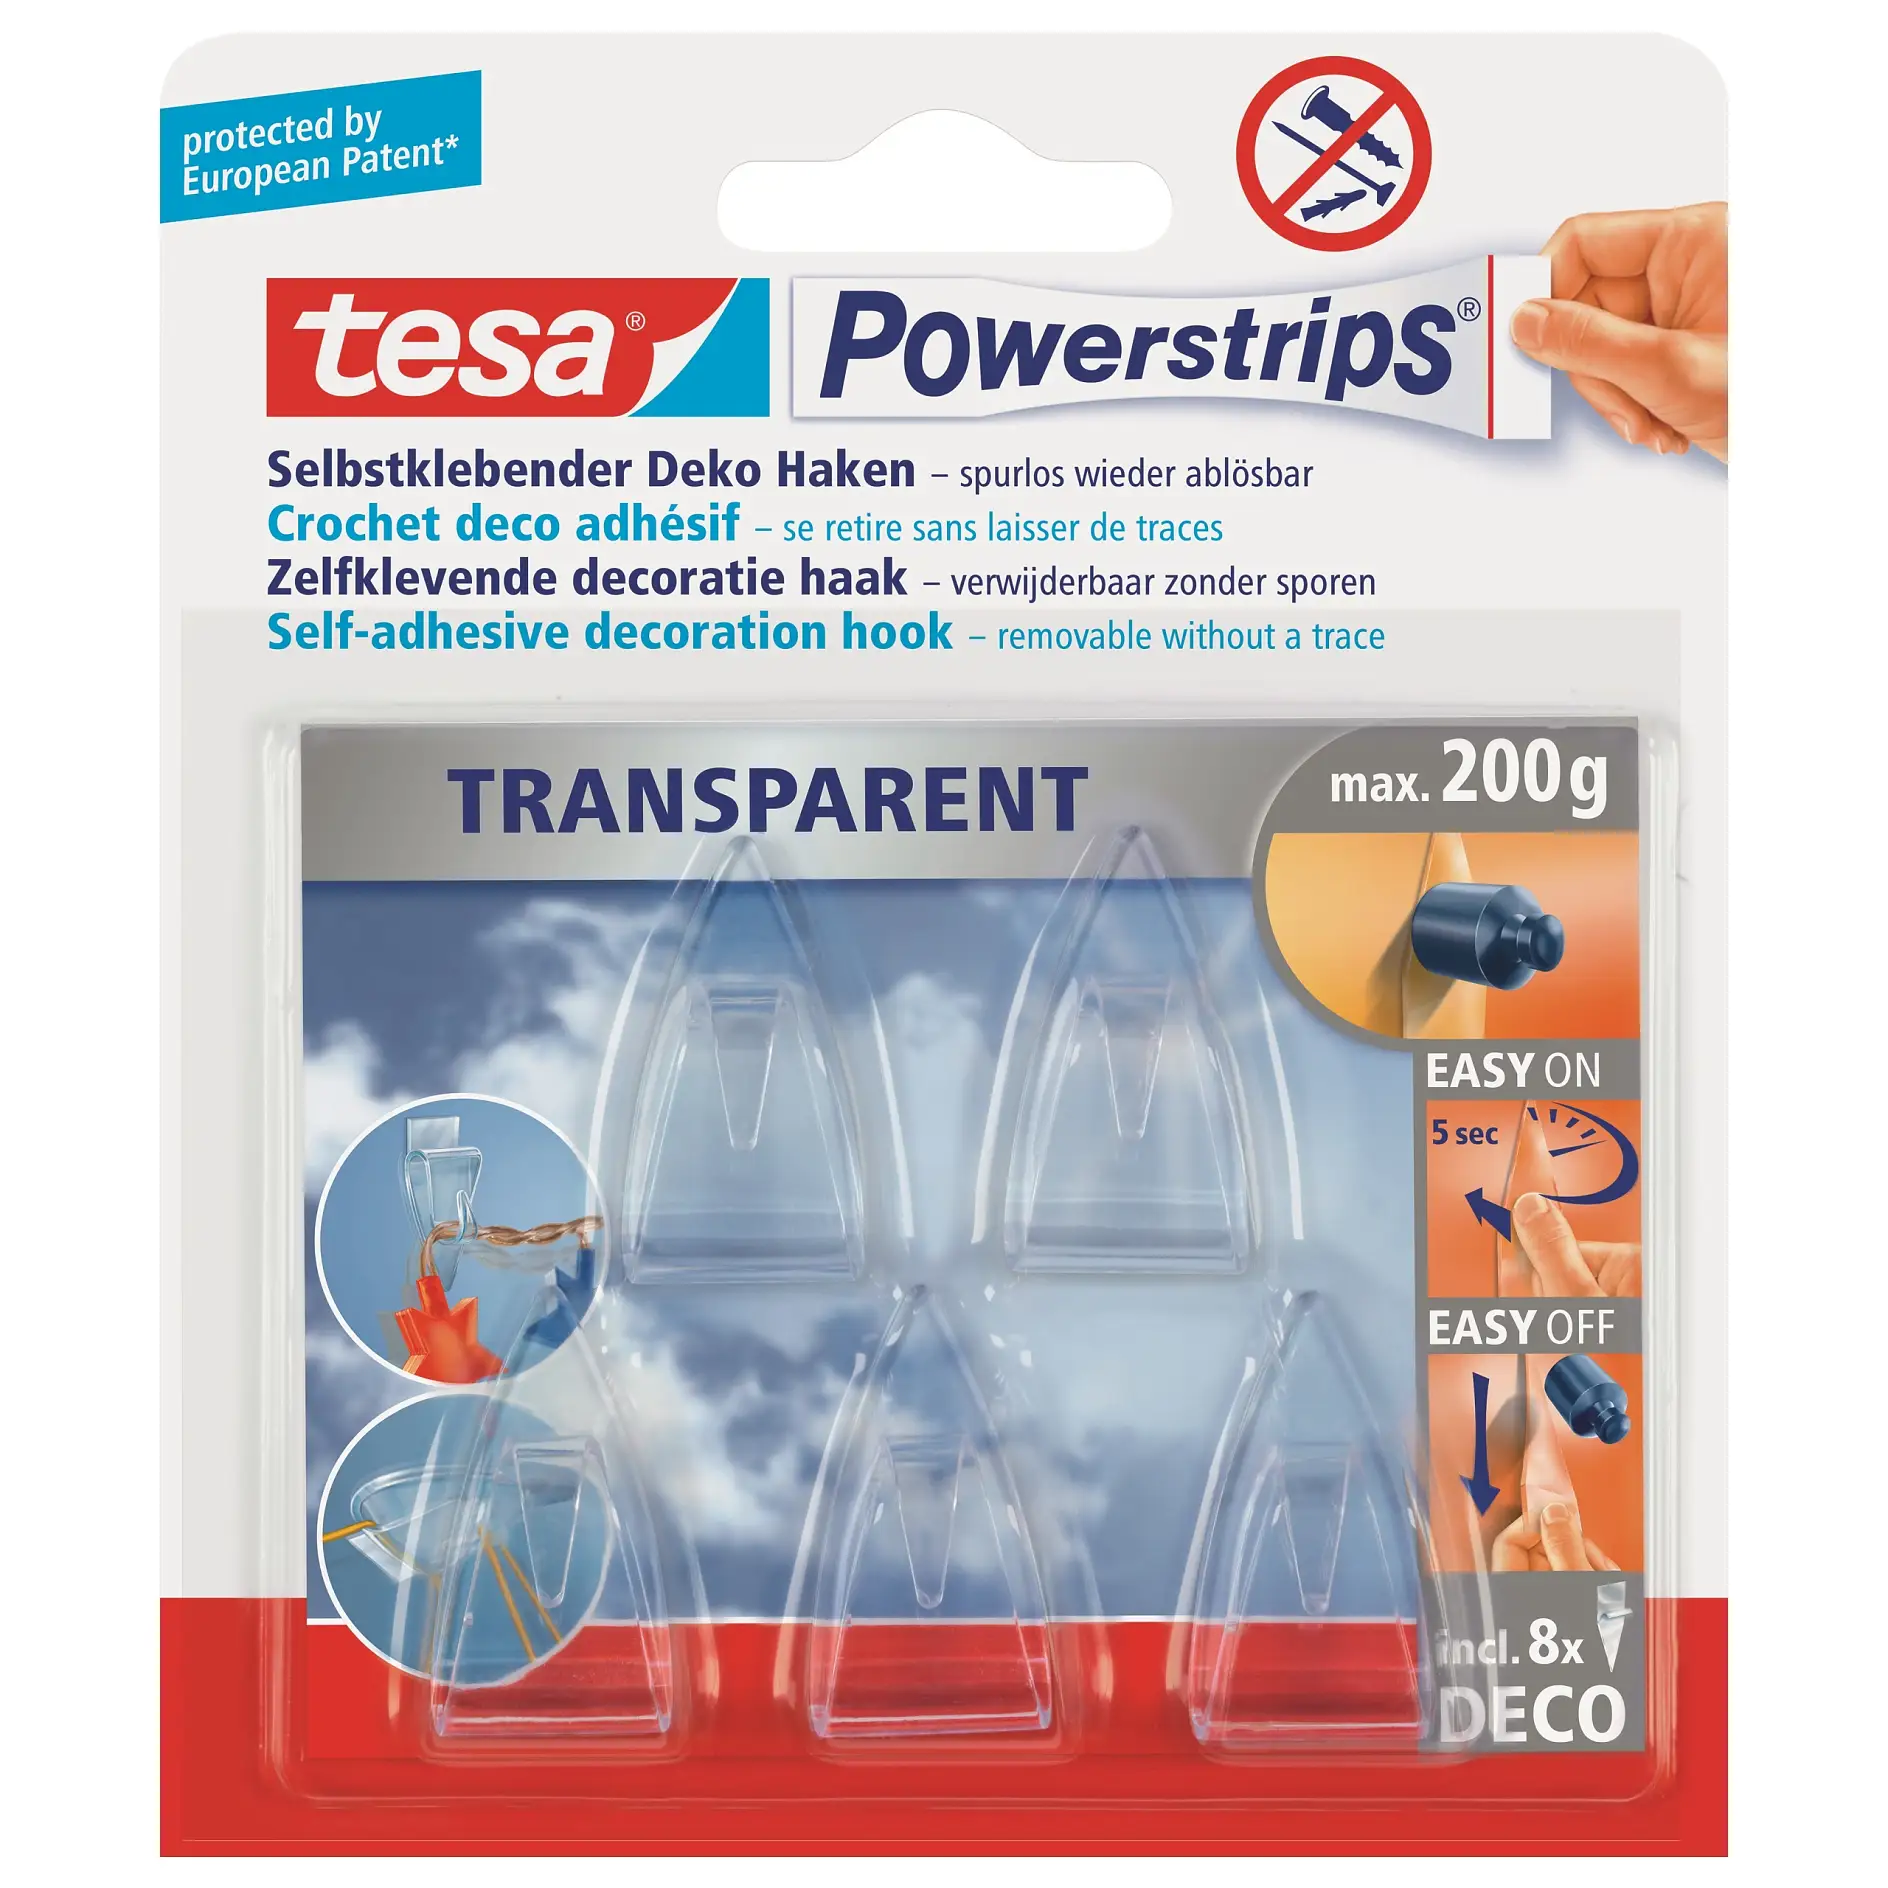 Paper rosette / tesa Powerstrips® Transparent DECO Hooks